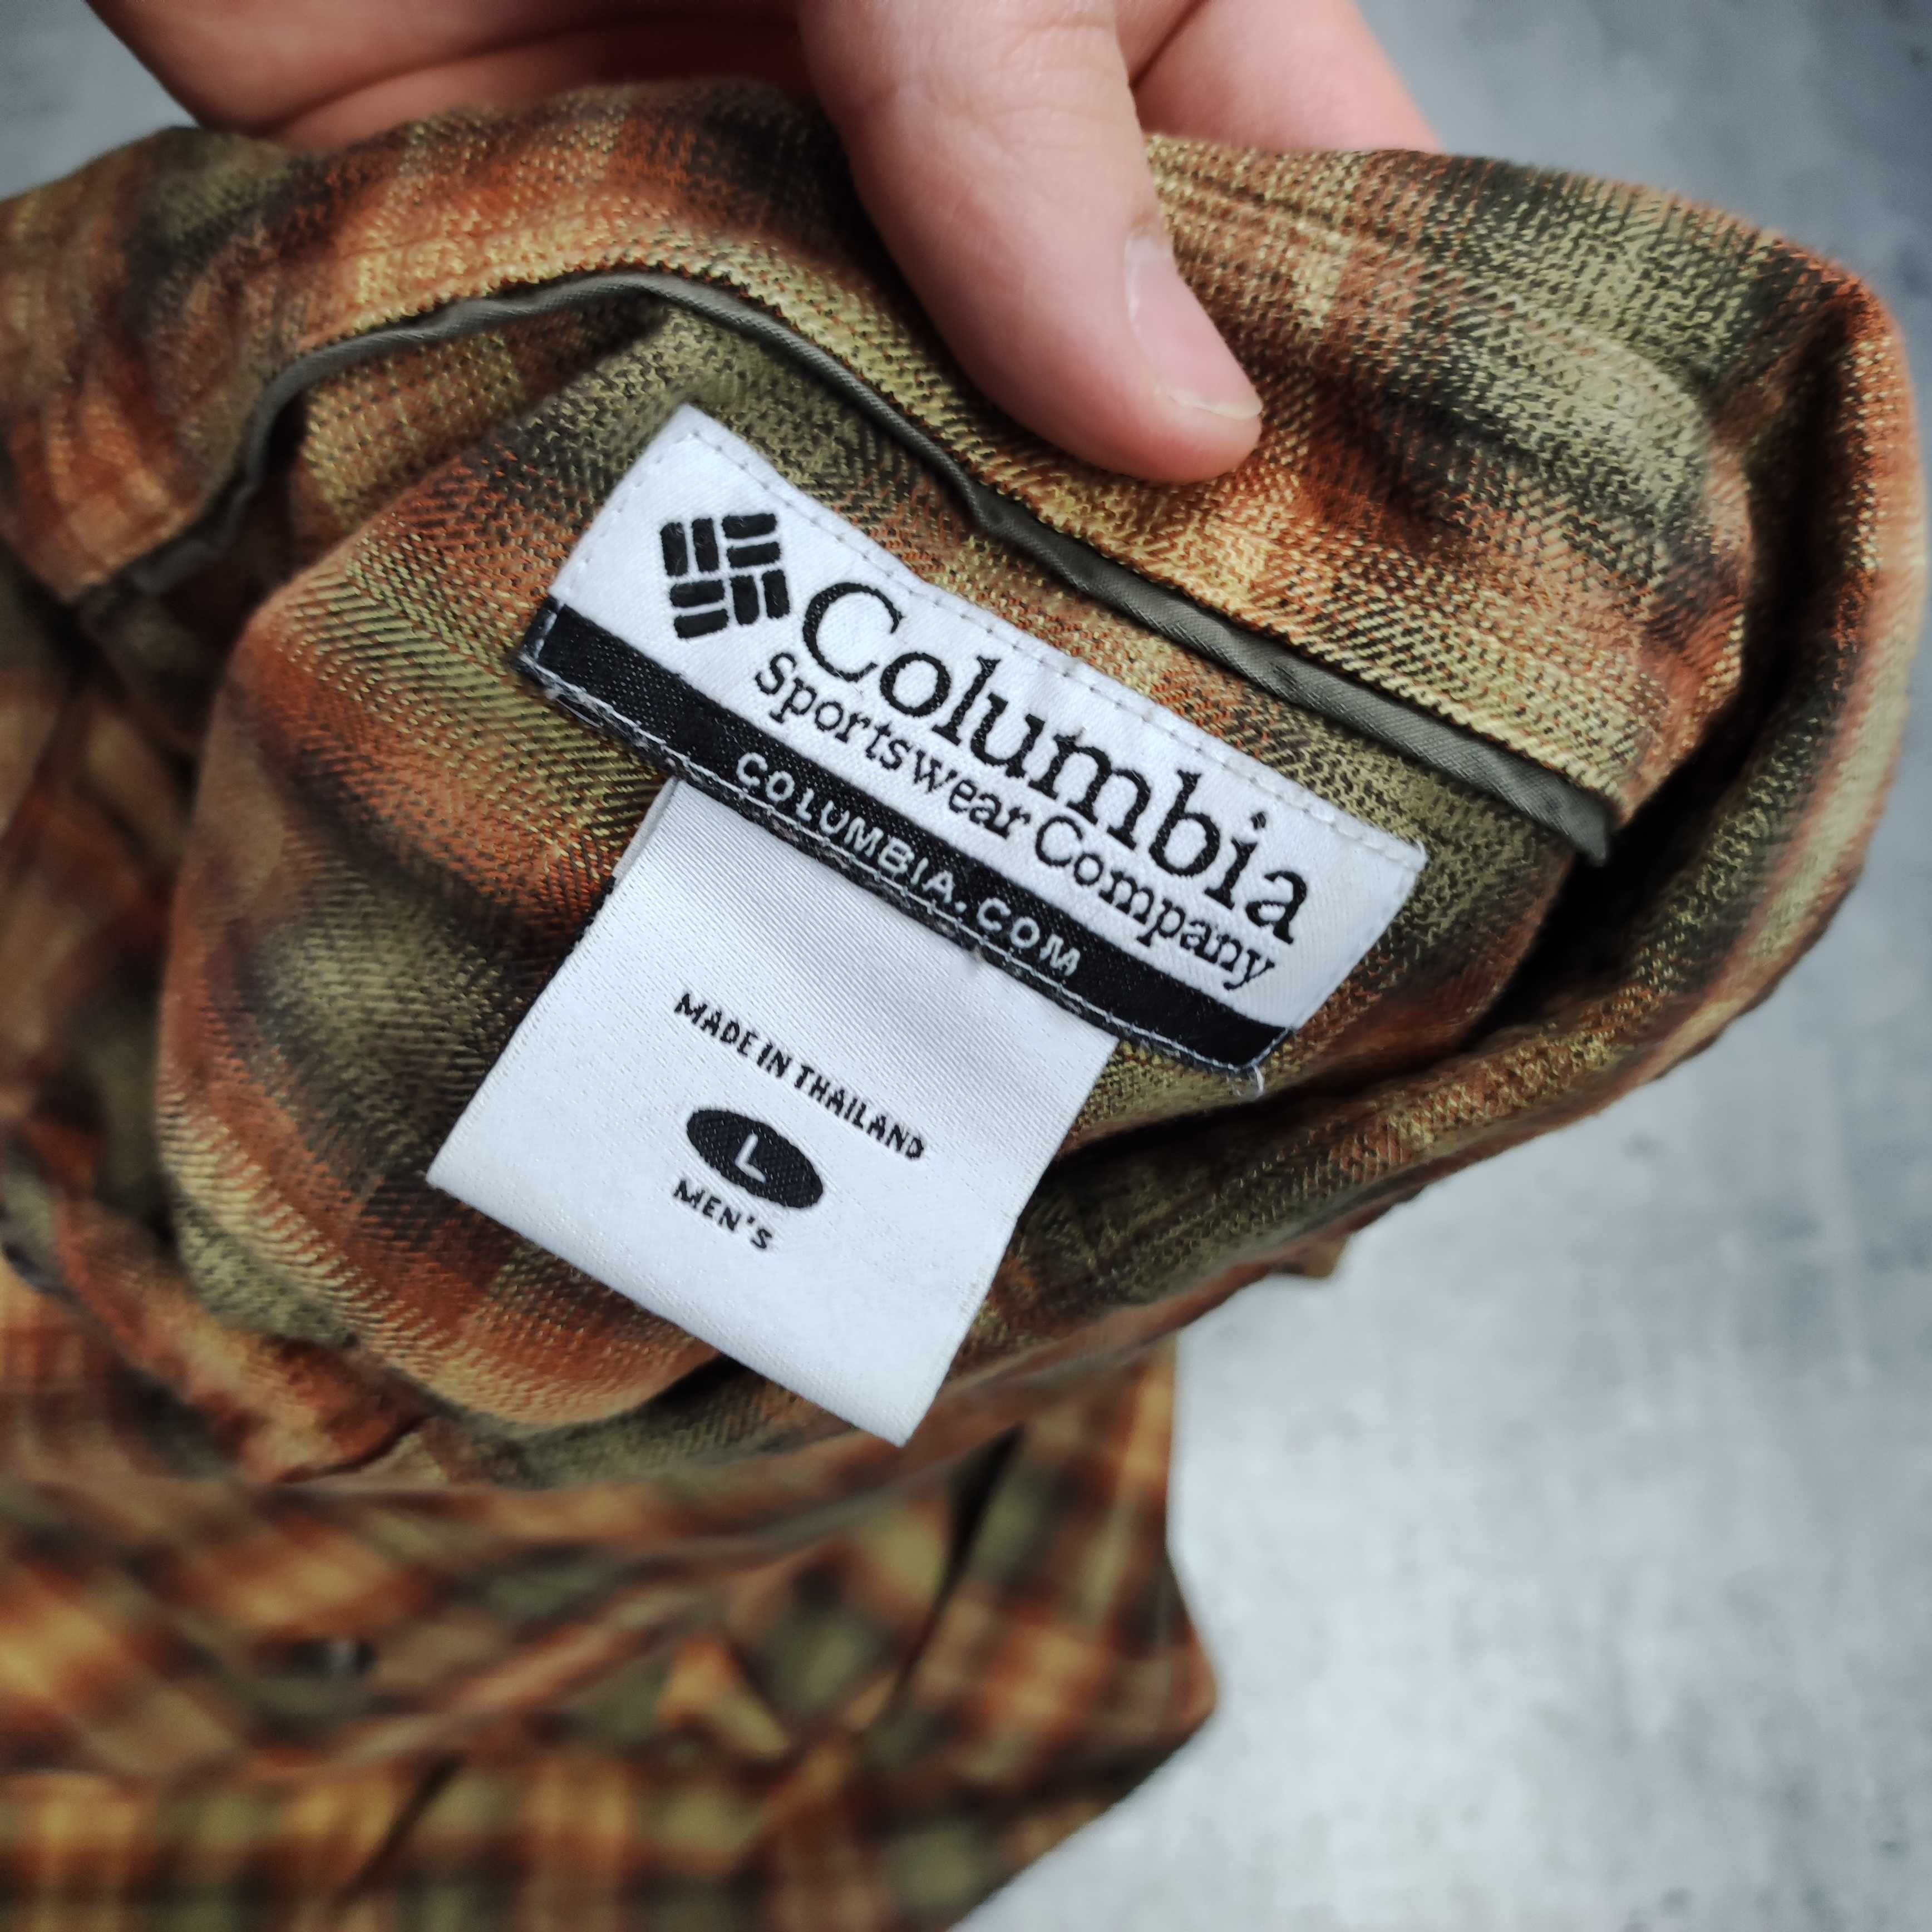 MĘSKA Koszula Columbia Trekking Długi Rękaw Cieplejsza Kratka Klasyk